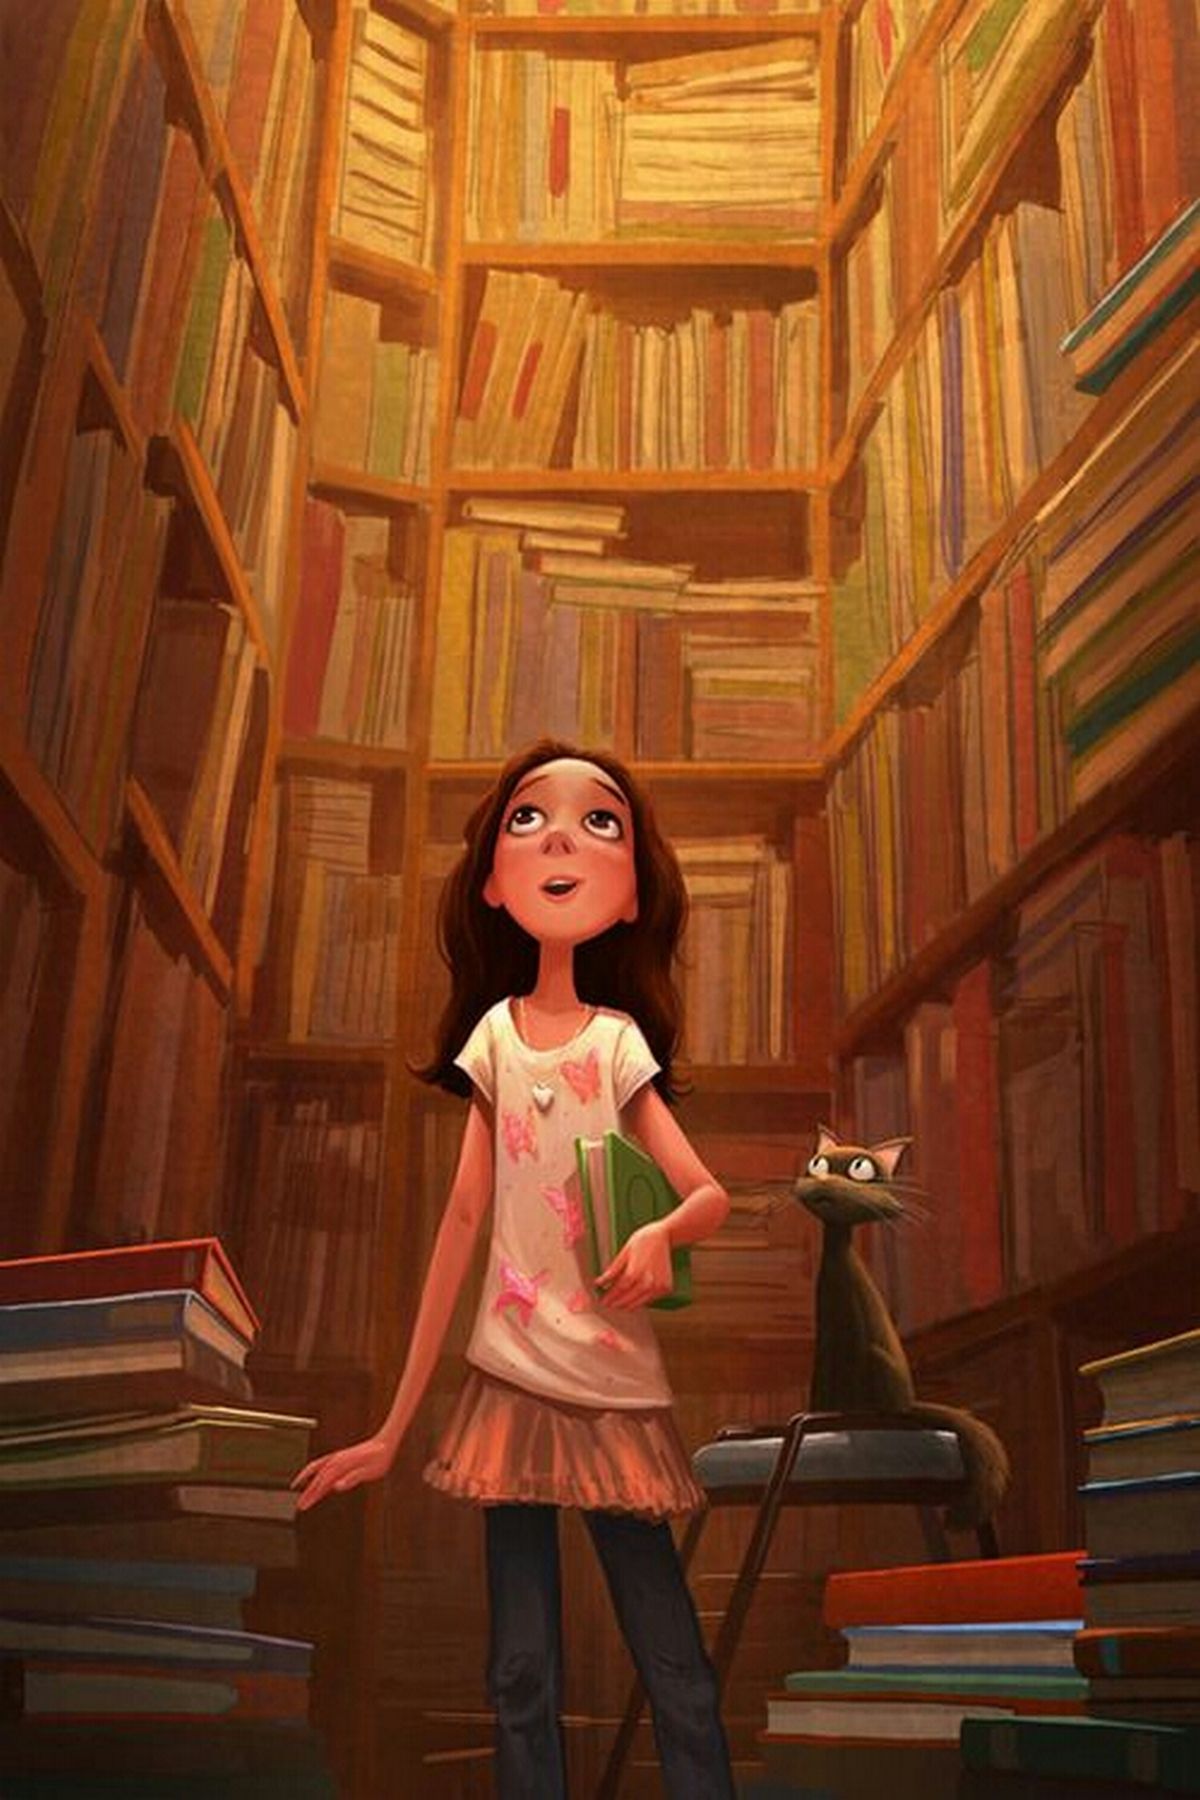 Аватарка книги. Иллюстрации к книгам. Чтение книг. Аватарка для библиотеки. Персонажи в библиотеке.